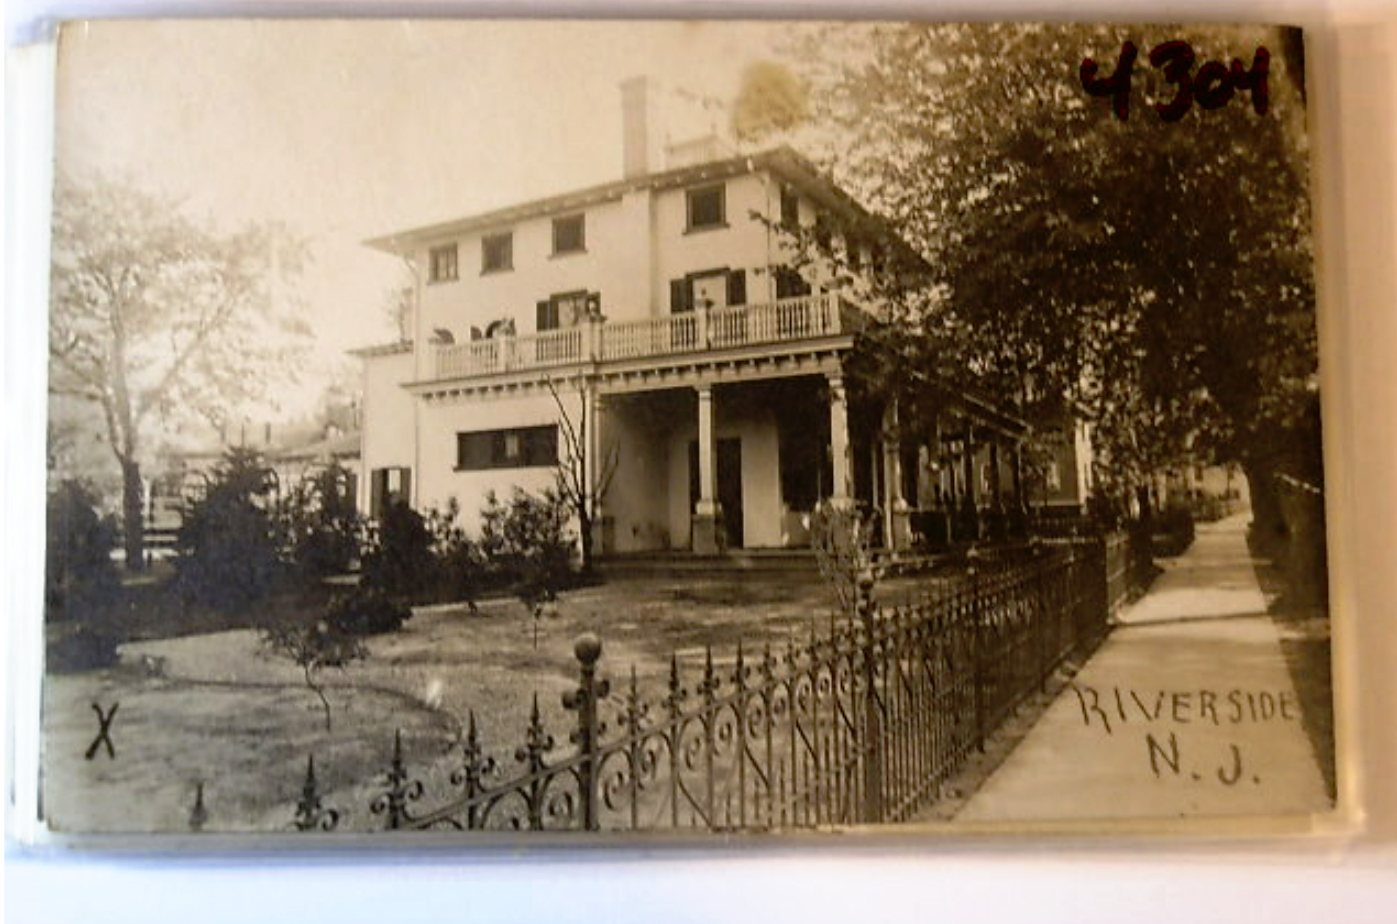 Riverside - The Zartborgg House - 1910